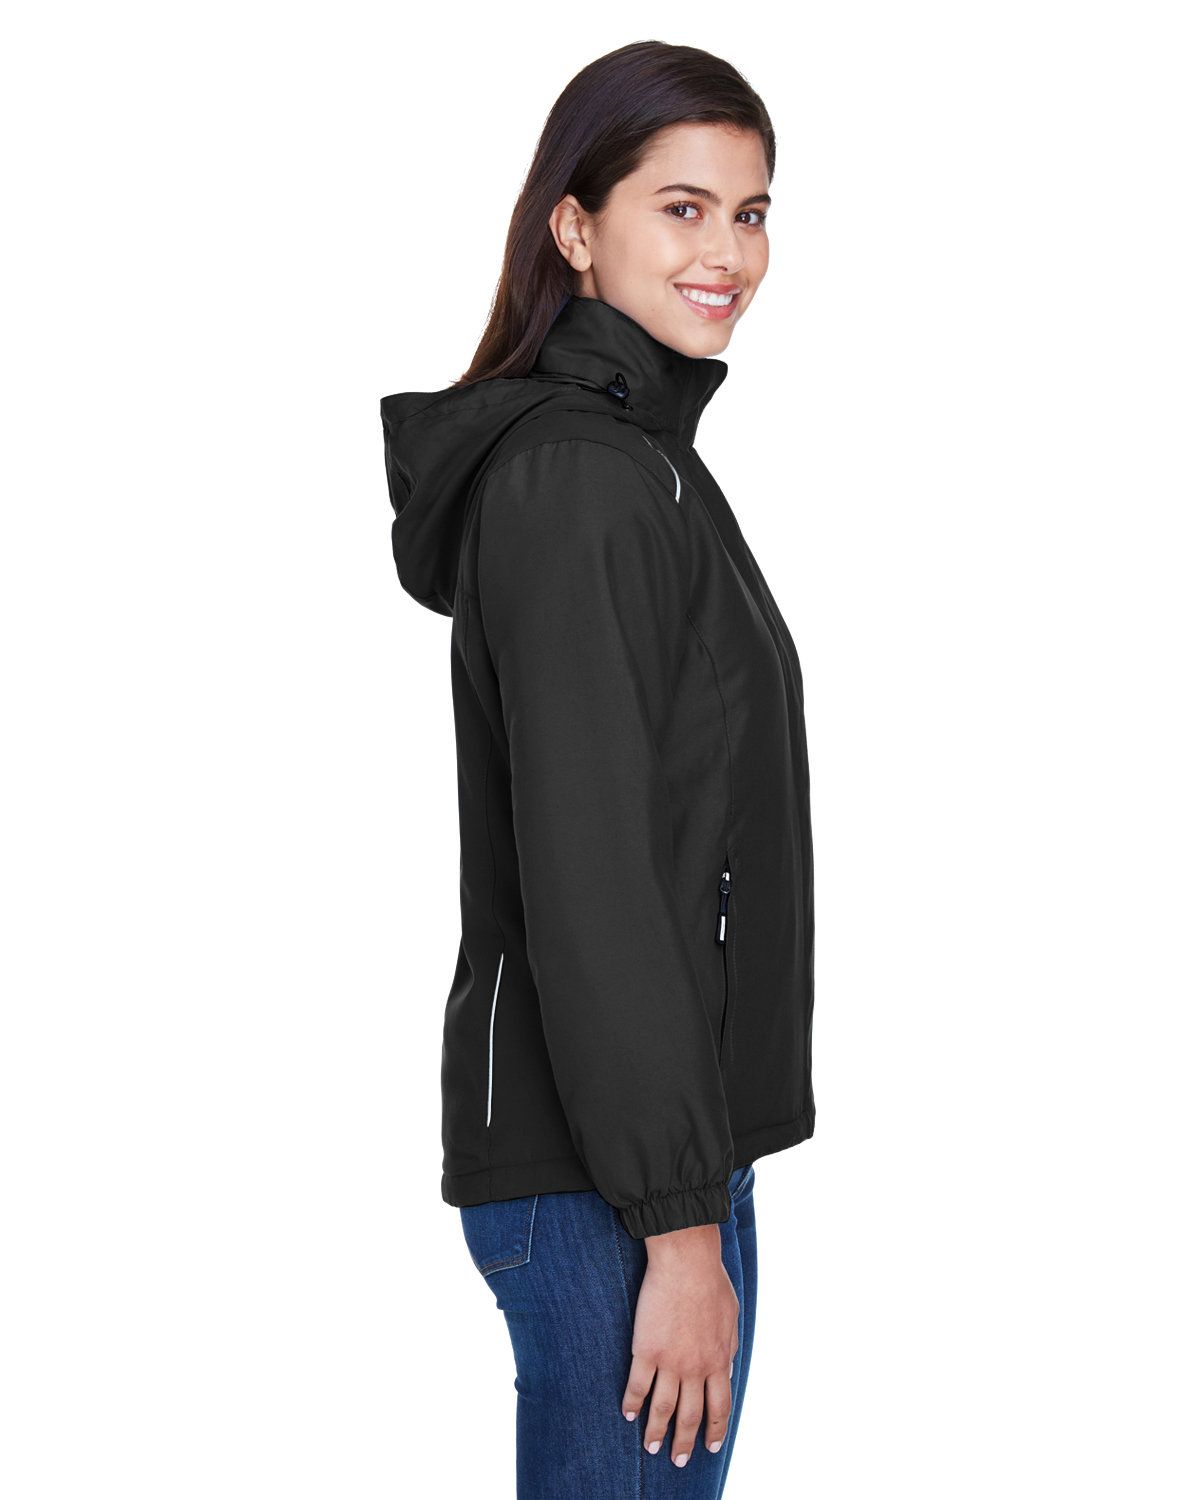 'Ash City - Core 365 78189 Ladies Brisk Insulated Jacket'